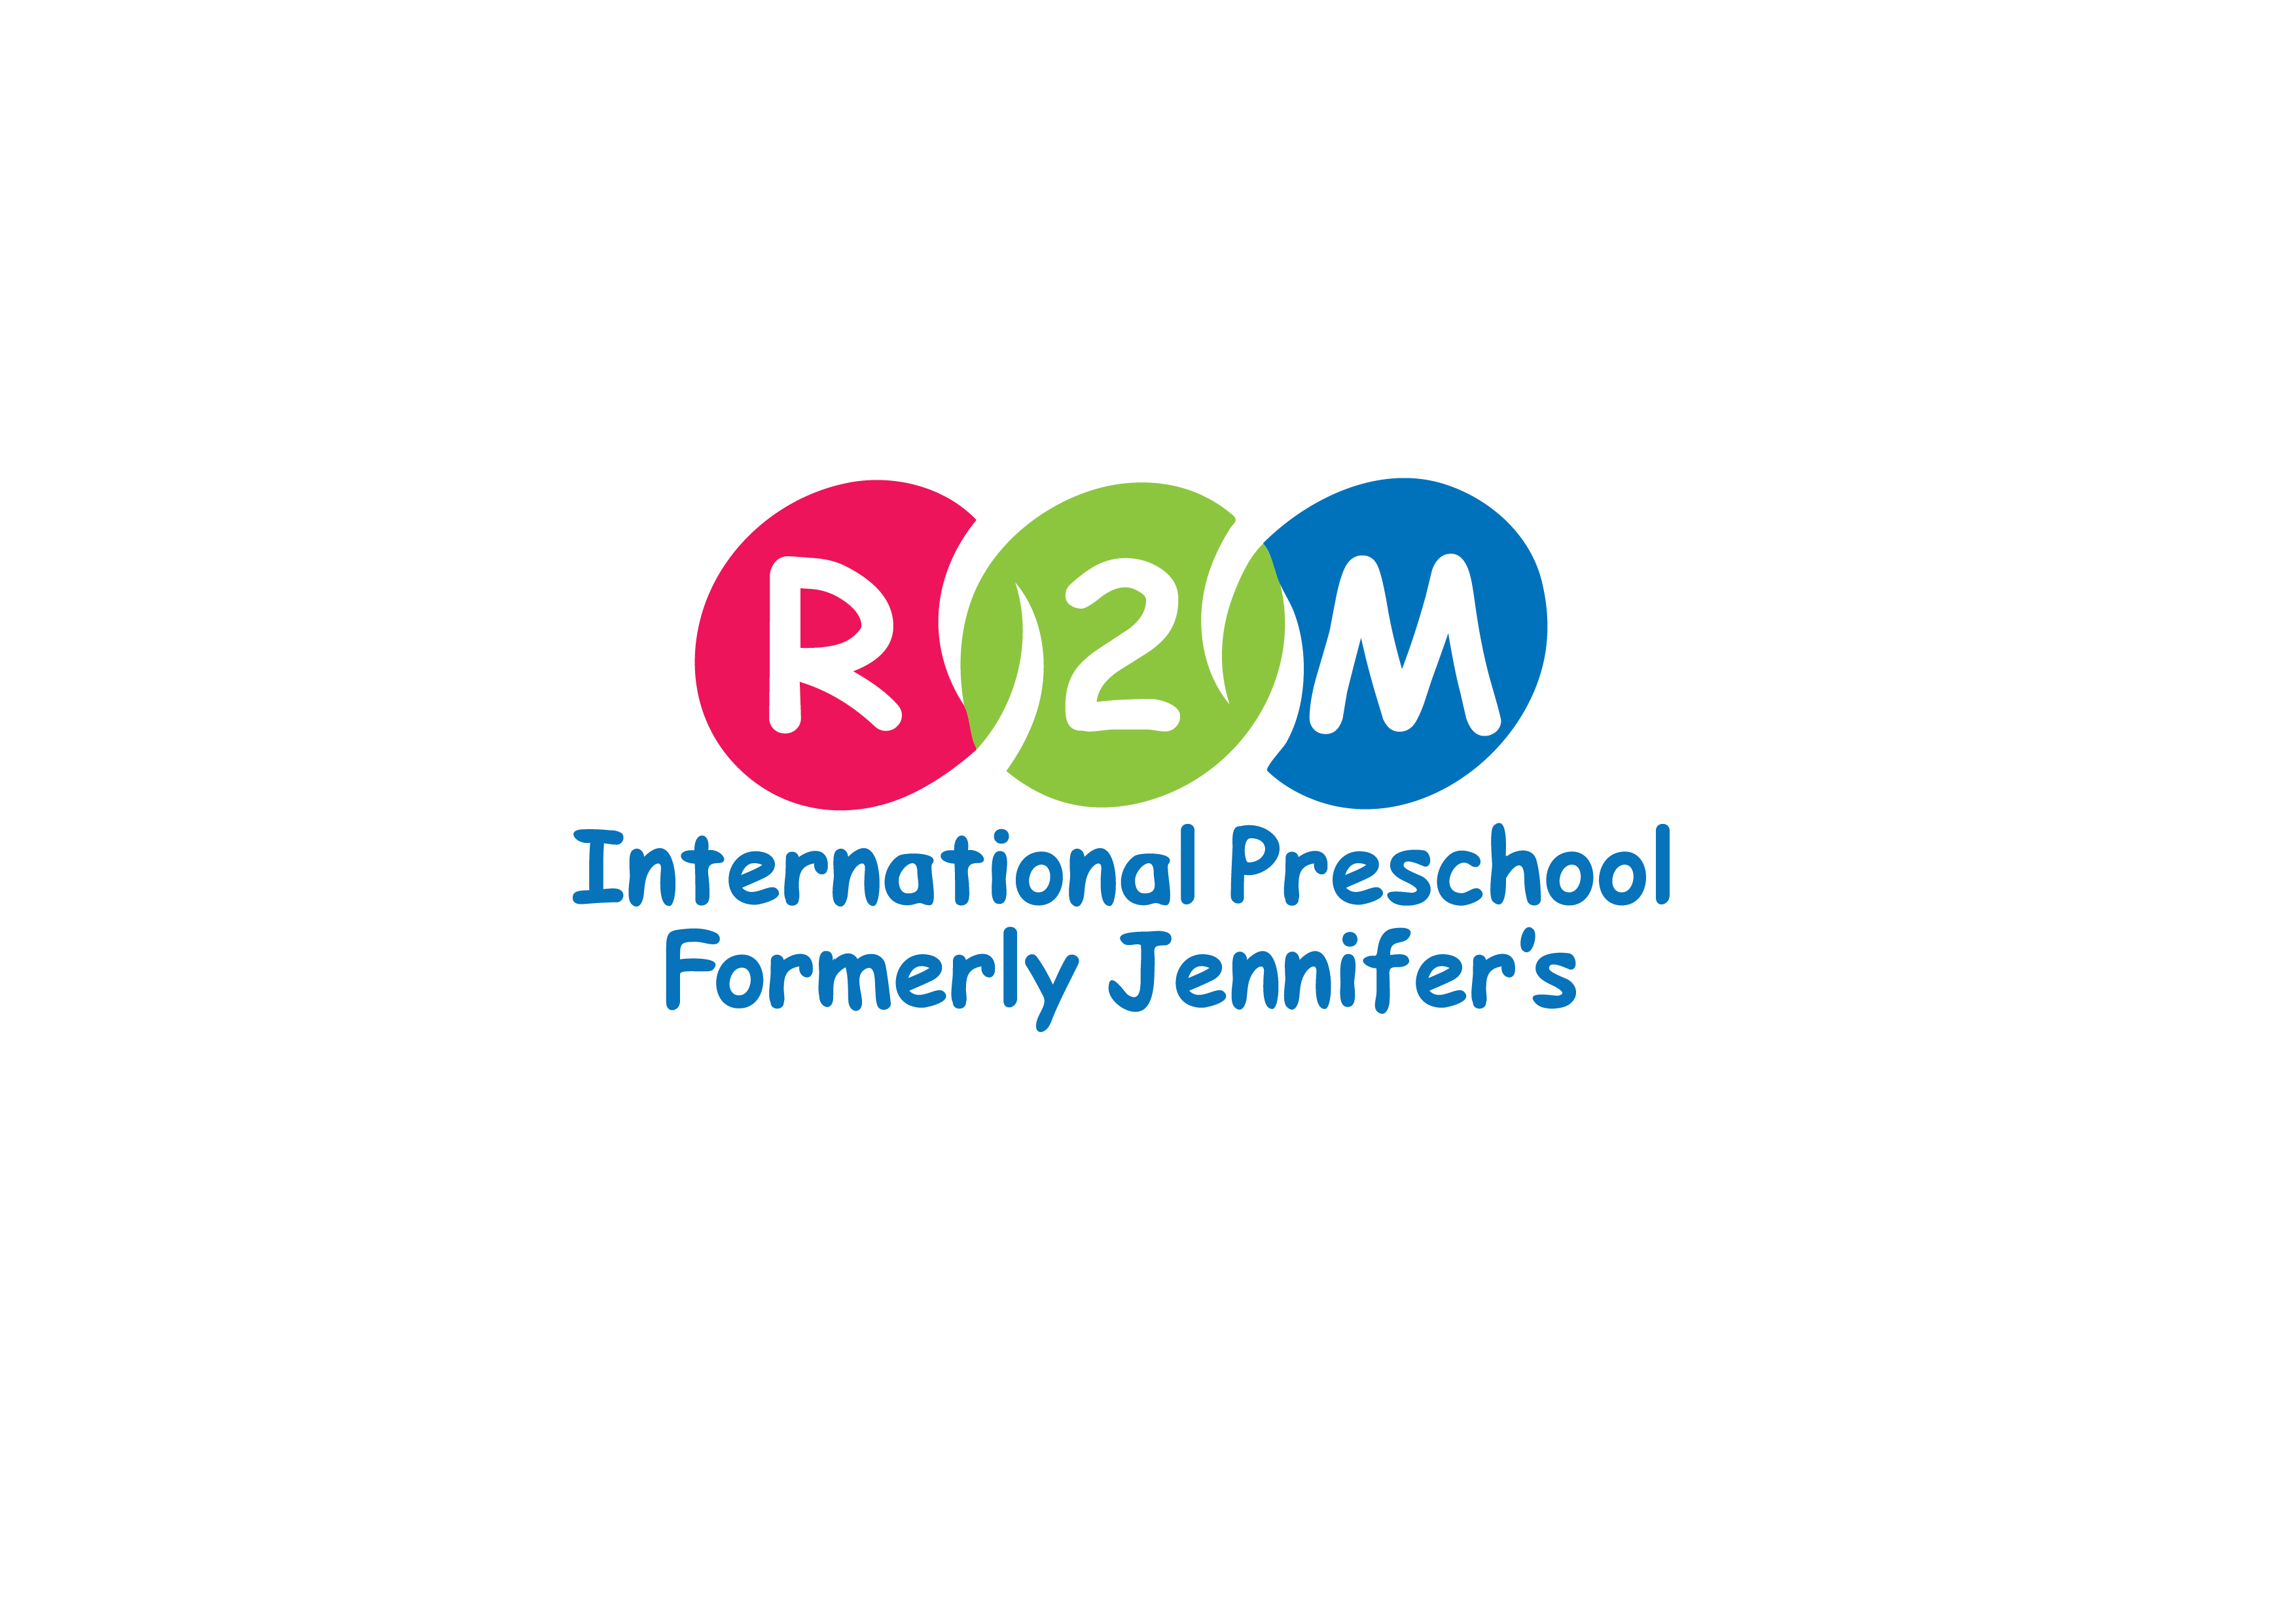 R2M International Pre-school